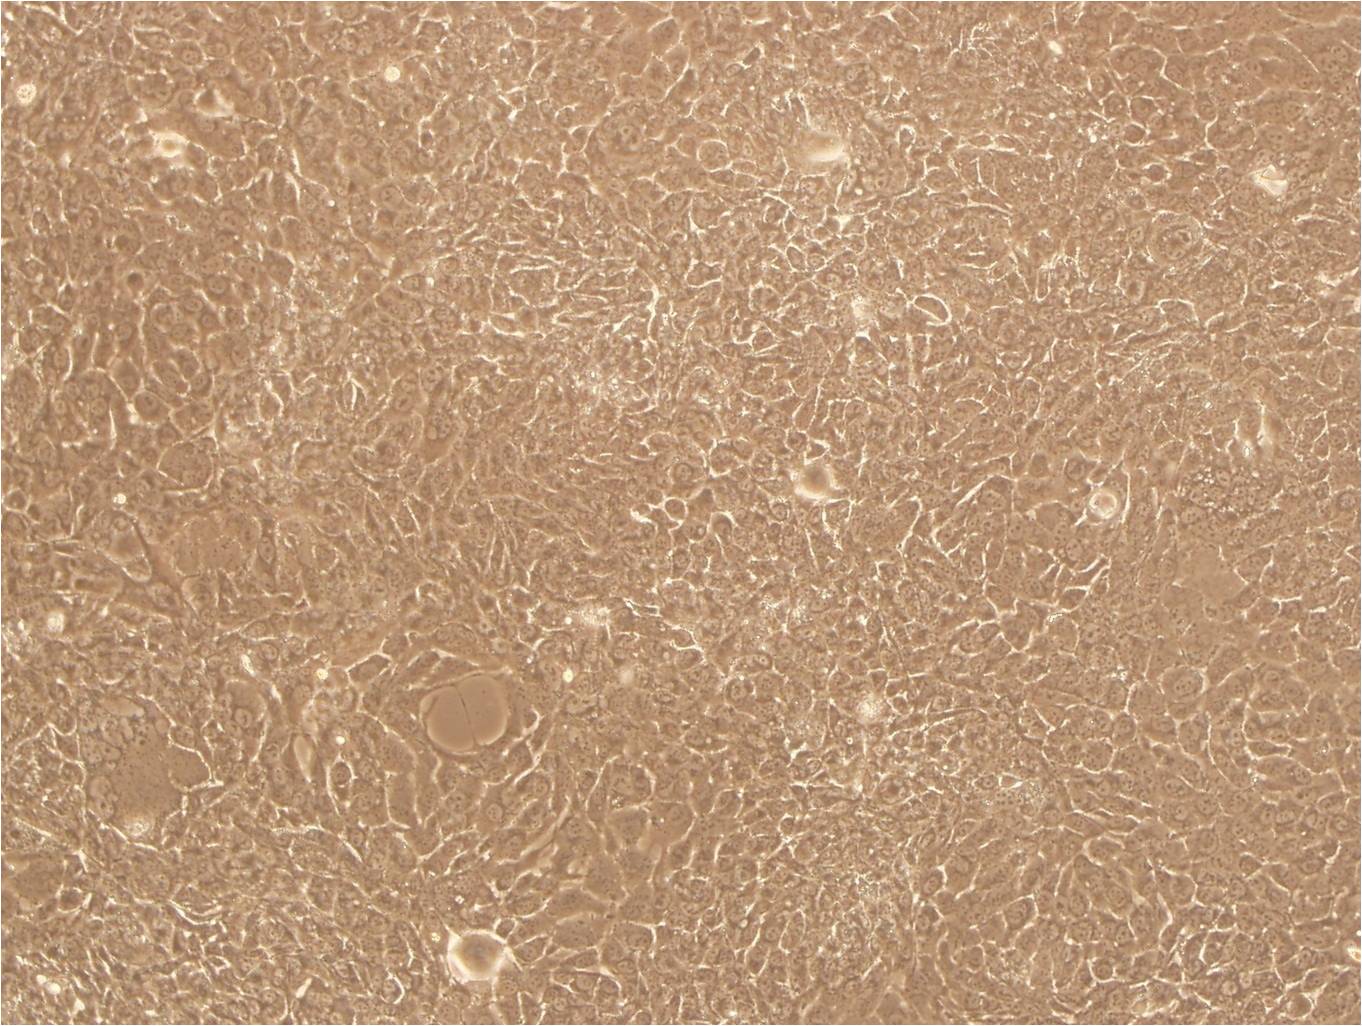 NIH 3T3 epithelioid cells小鼠胚胎细胞系